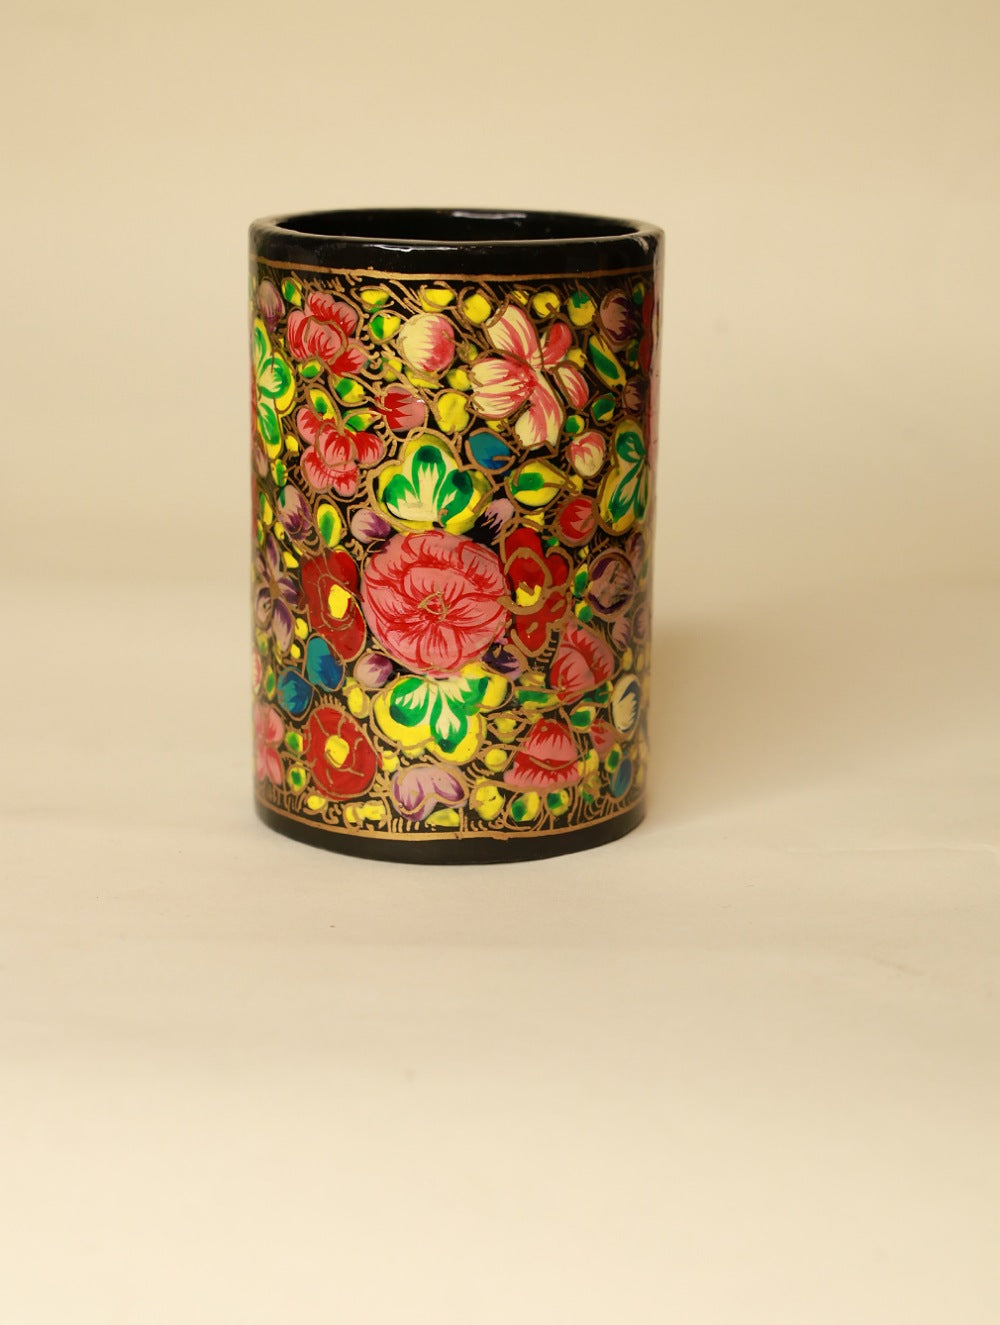 Load image into Gallery viewer, Fine Kashmiri Art Pen Stands (Set of 2) - Florals